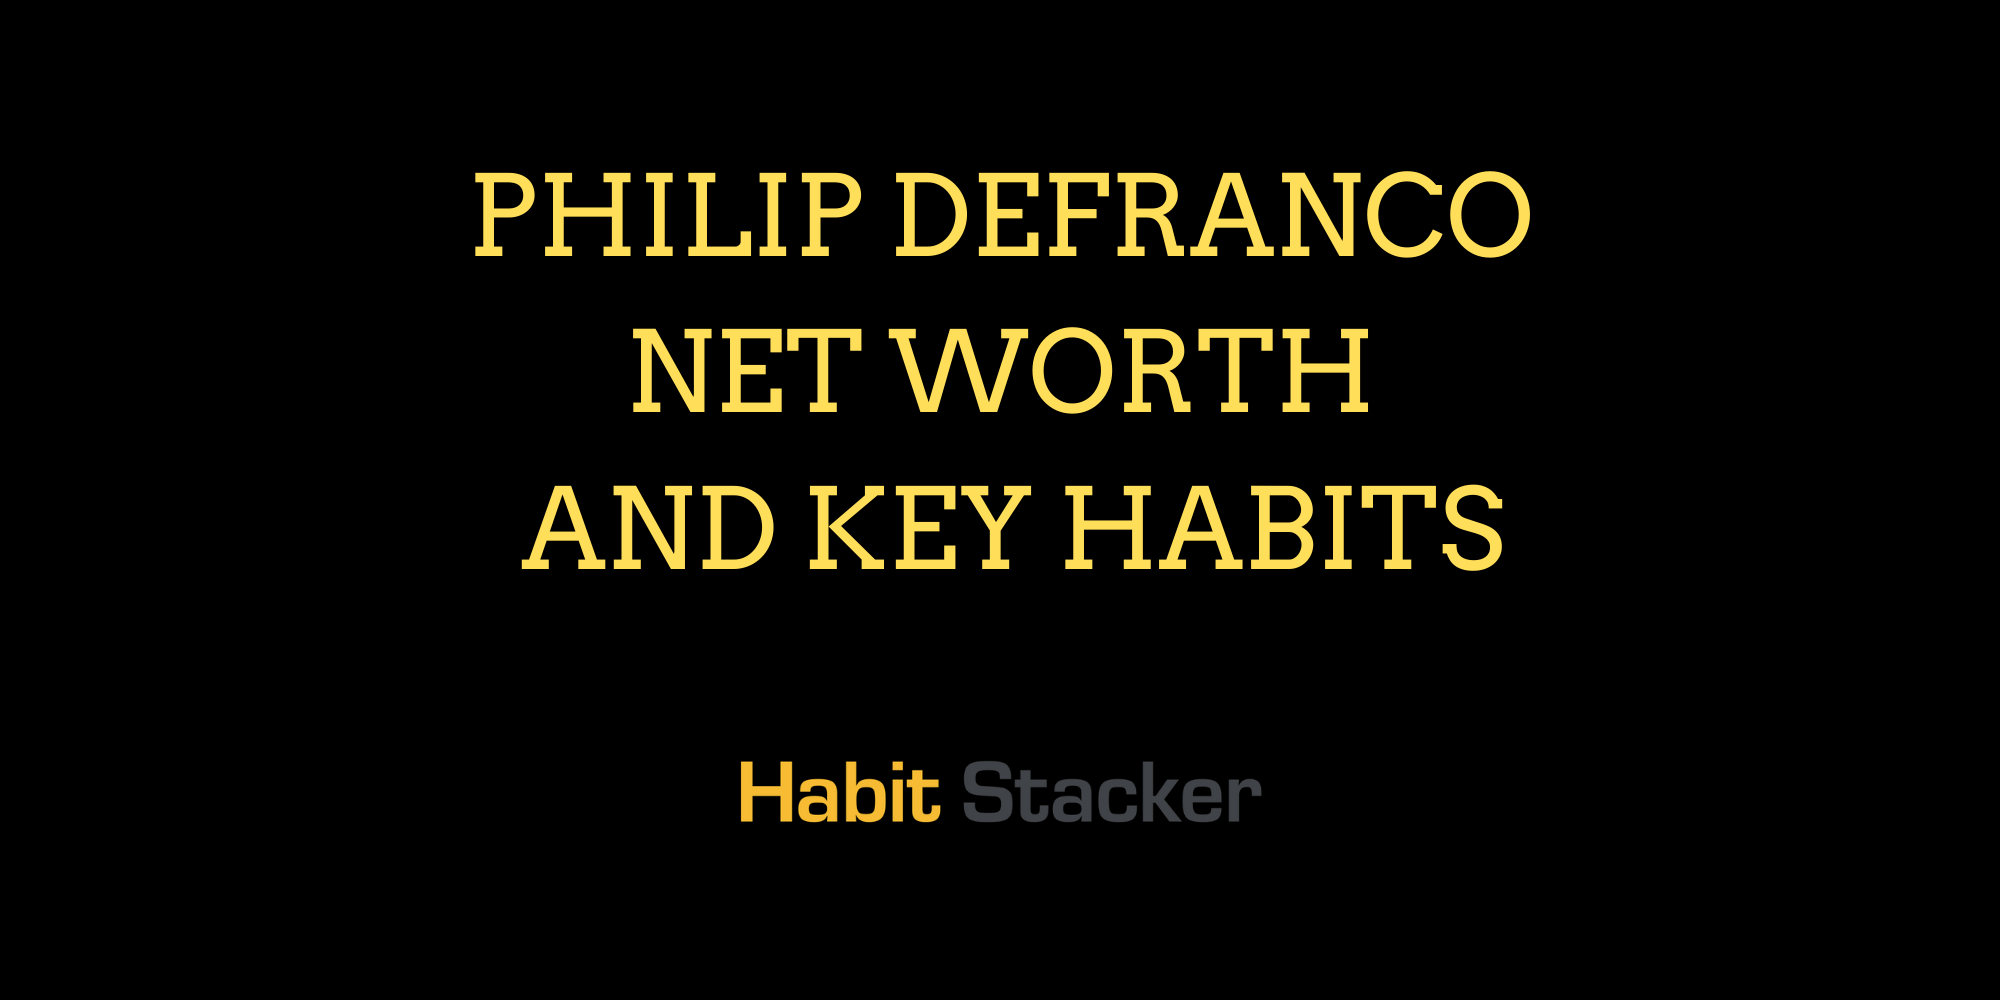 Philip Defranco Net Worth And Key Habits